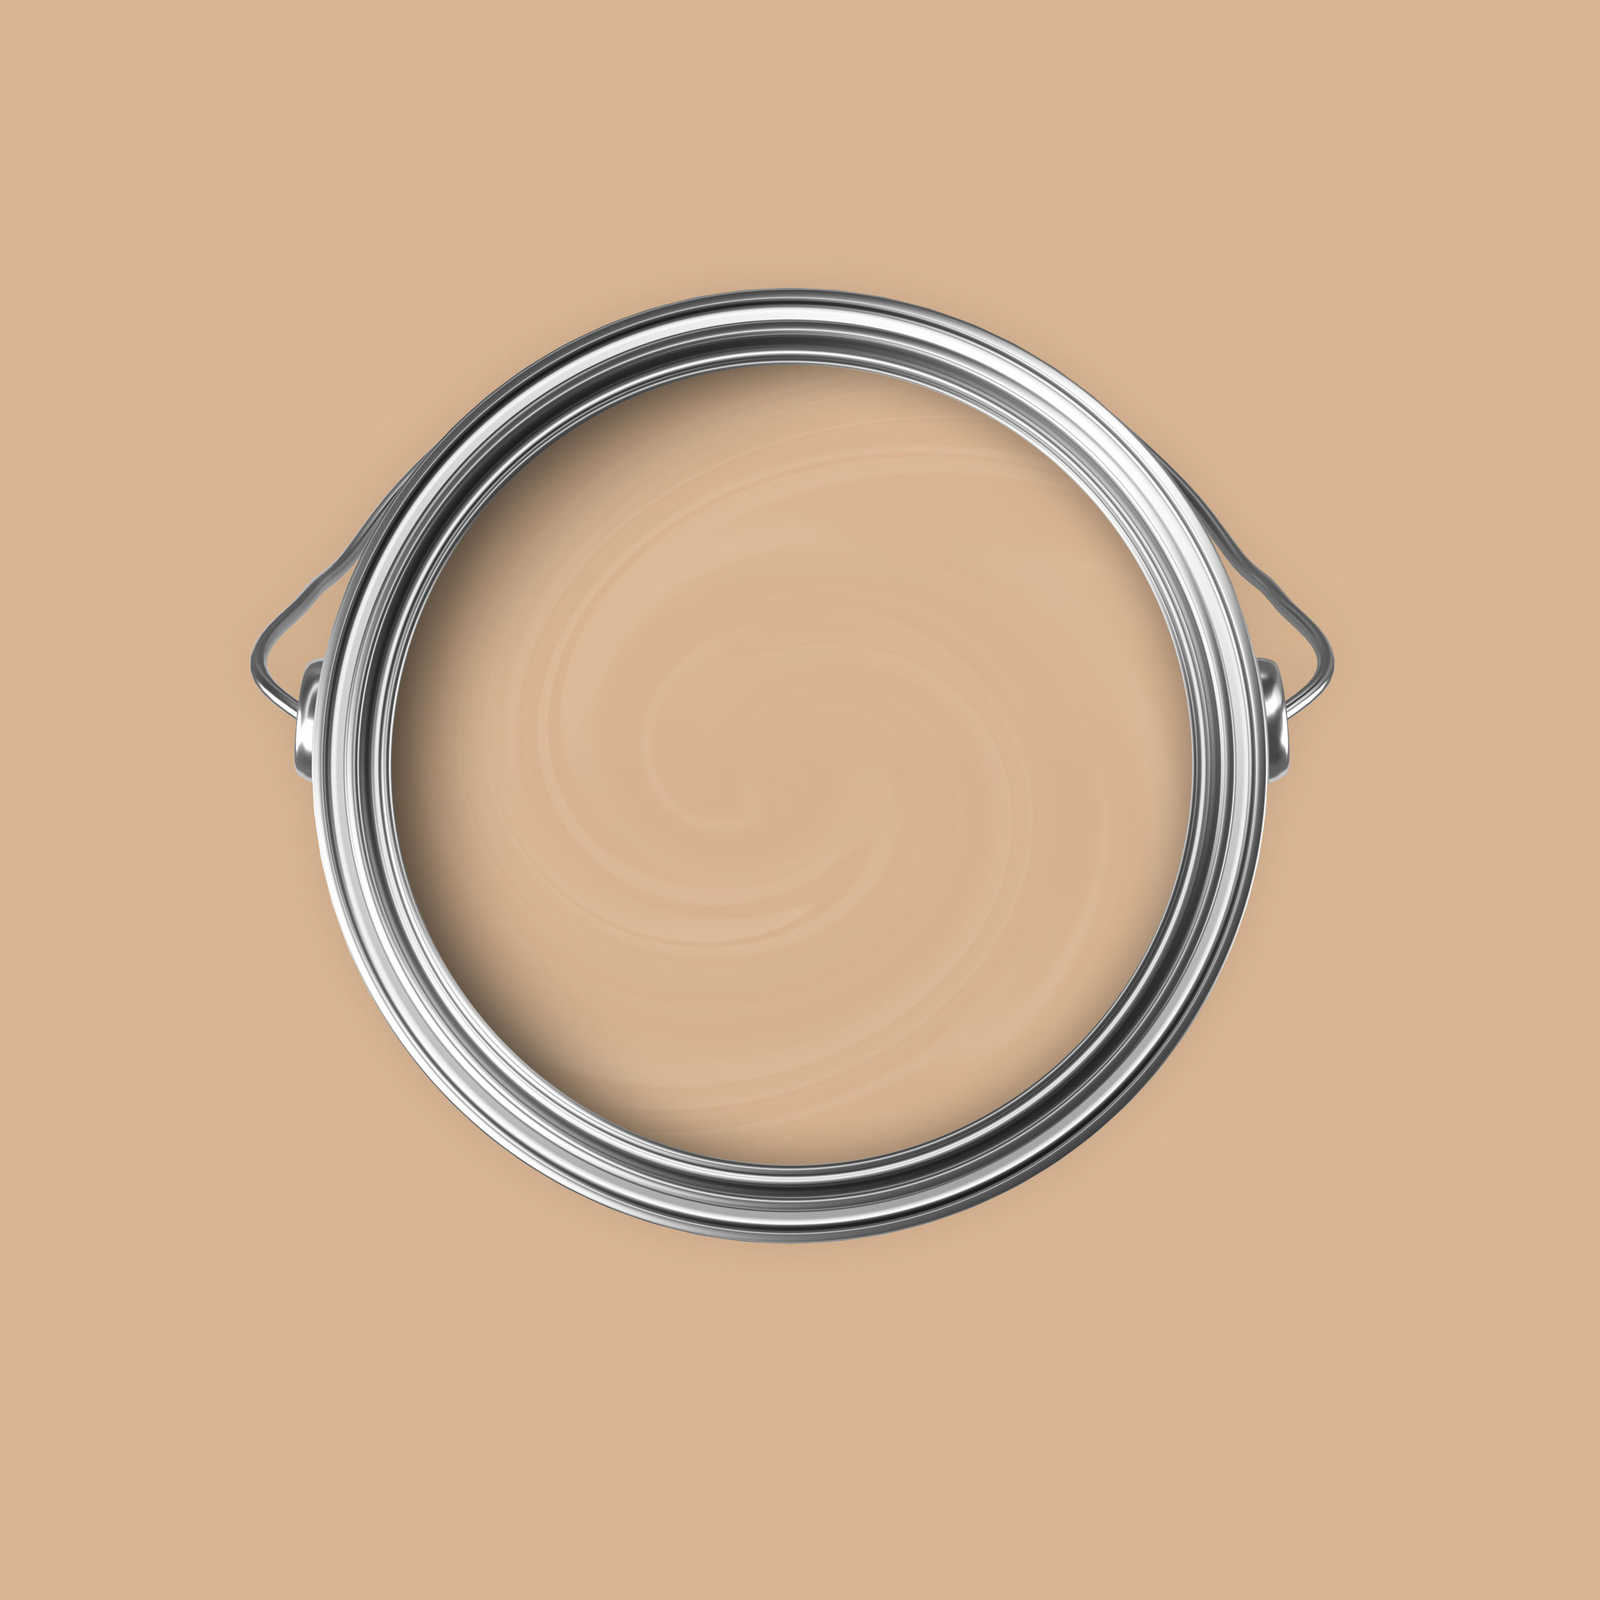             Premium Wall Paint cheerful light beige »Boho Beige« NW727 – 5 litre
        